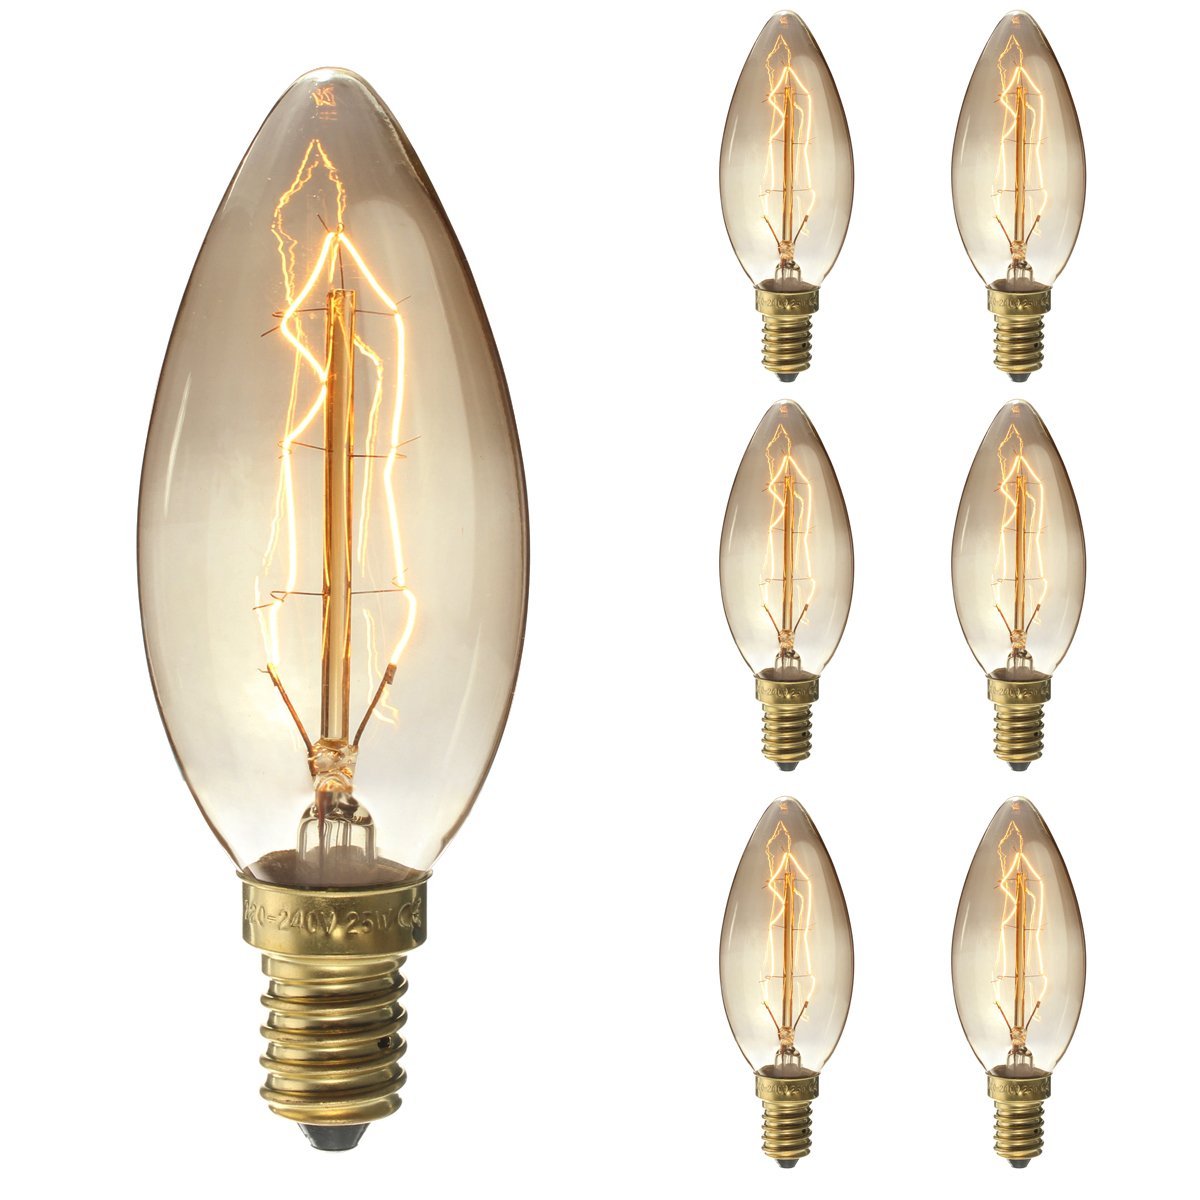 6PCS-Elfeland-Dimmable-E14-25W-Retro-Edison-Vintage-Incandescent-Light-Bulb-for-Indoor-Garden-AC220V-1514344